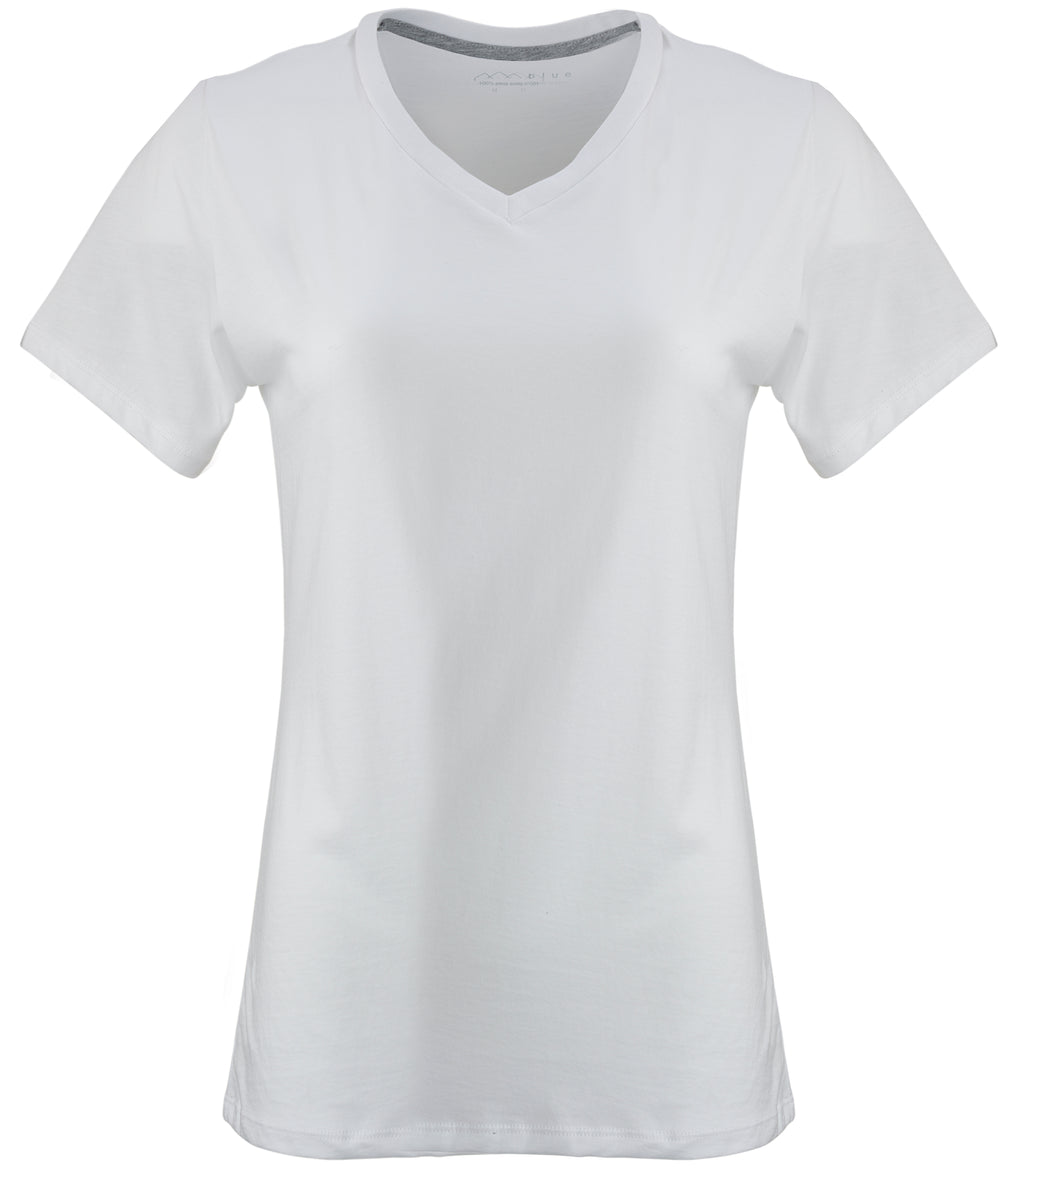 Women's 100% Pima Cotton Tee Shirt V-Neck